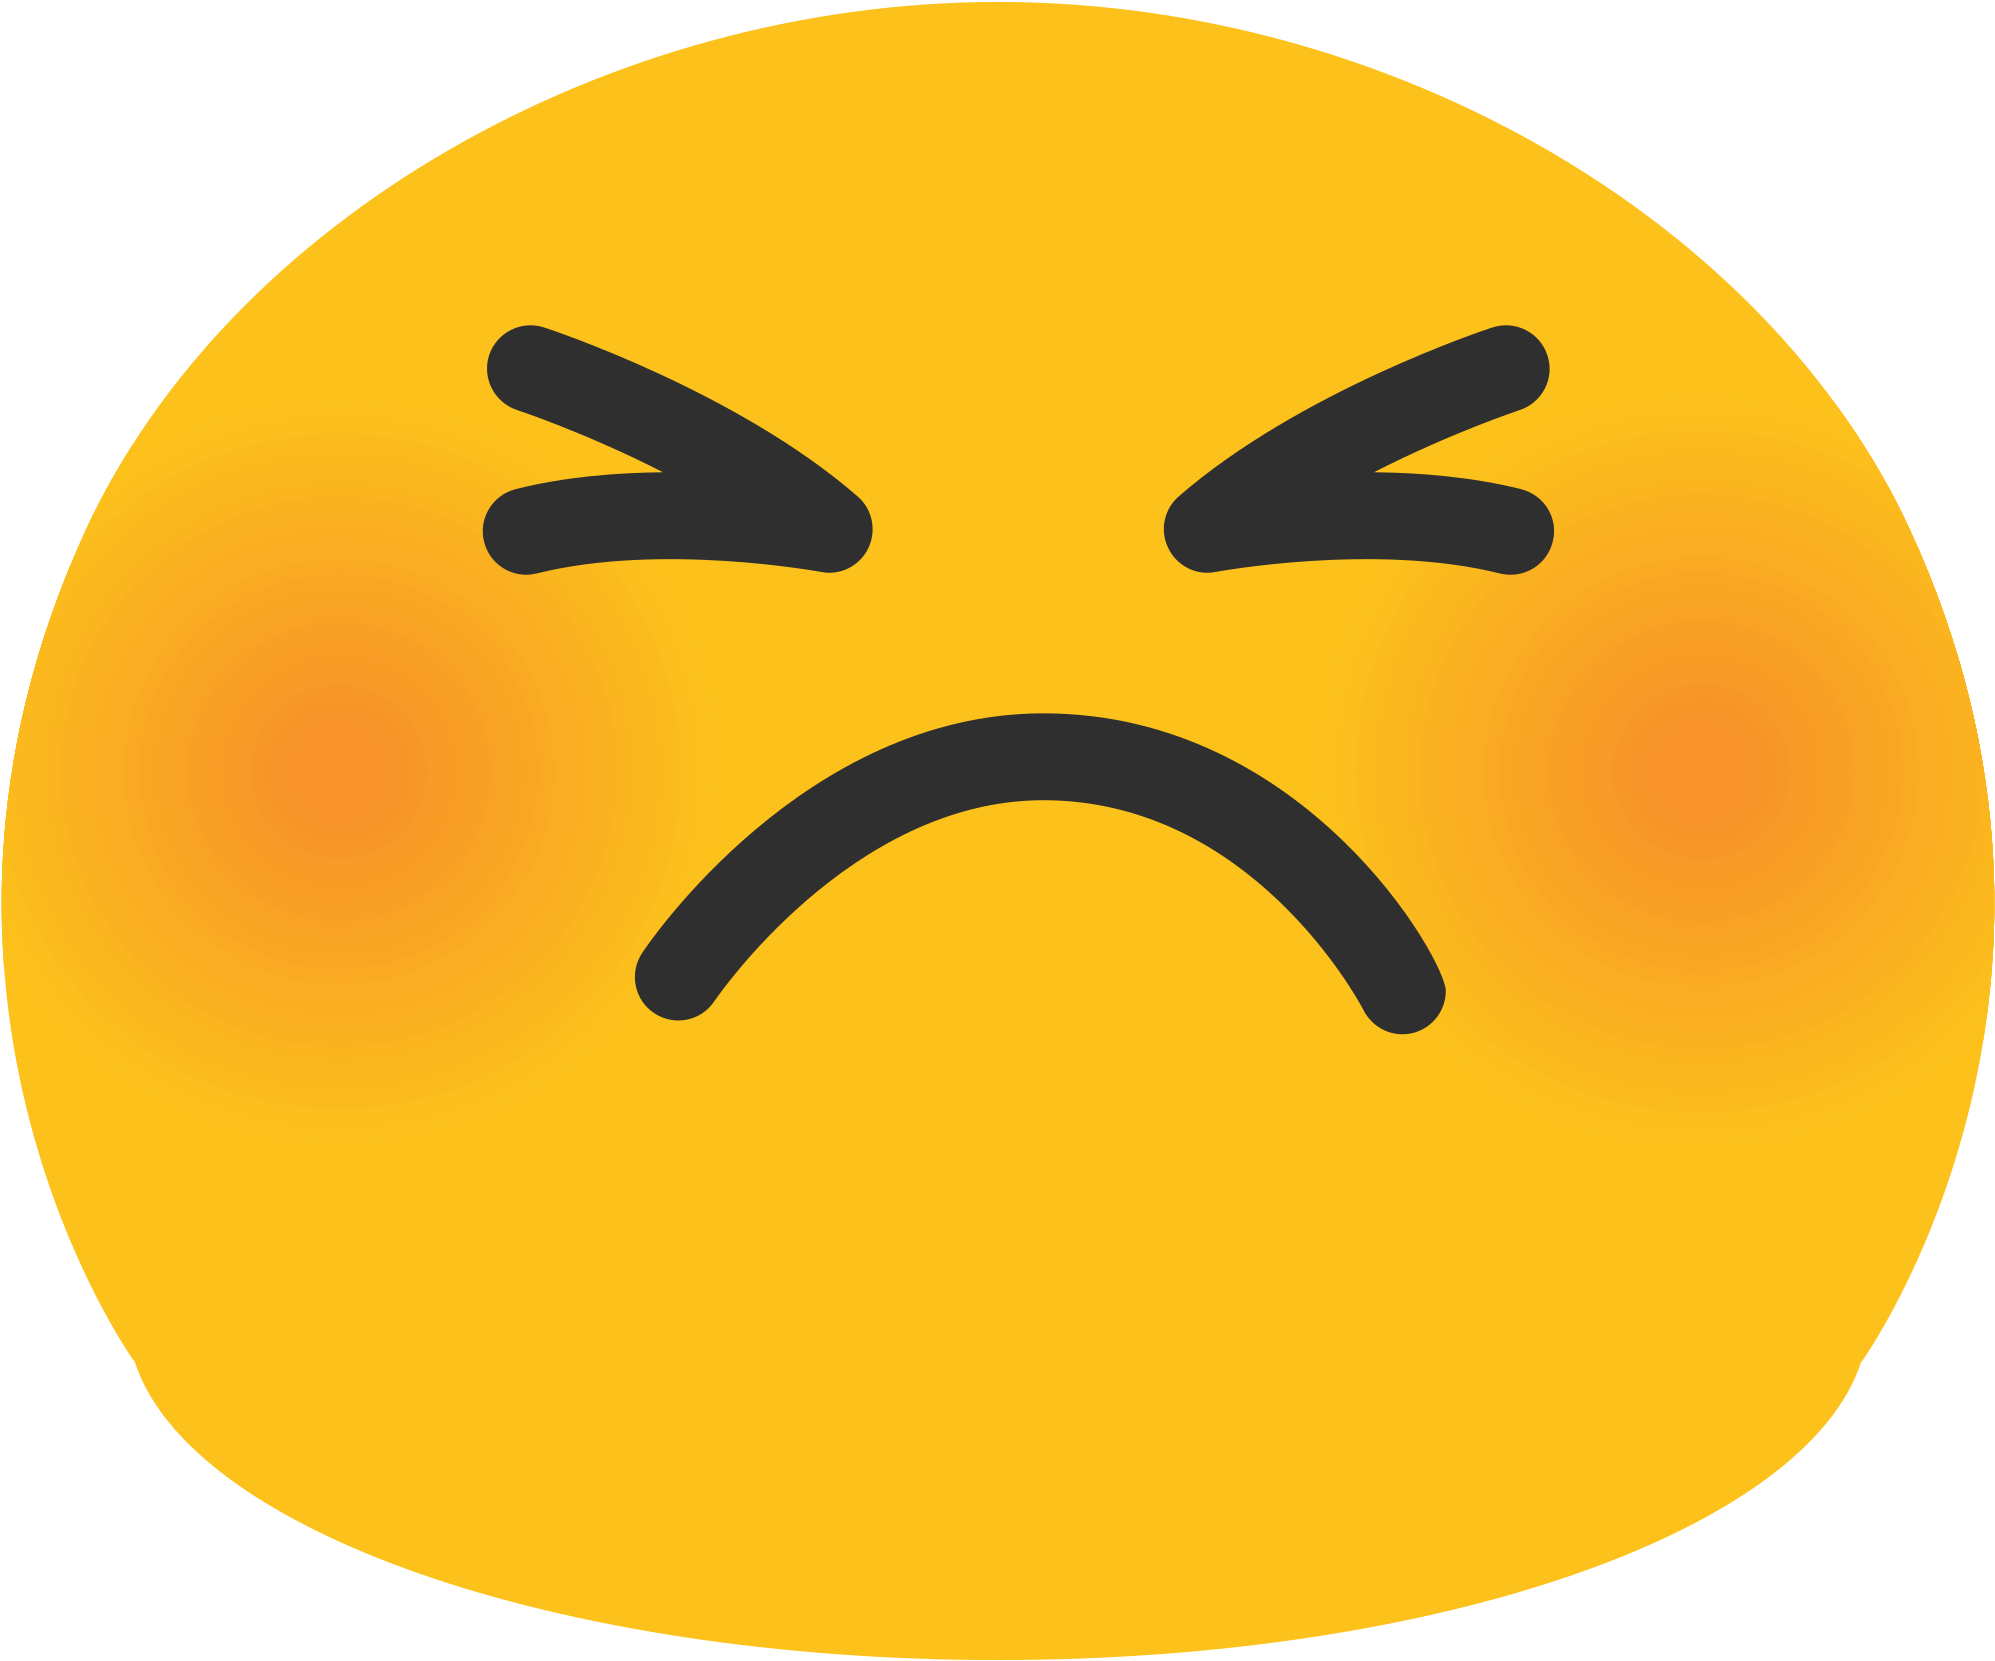 Face en colère Emoji PNG image Transparentee